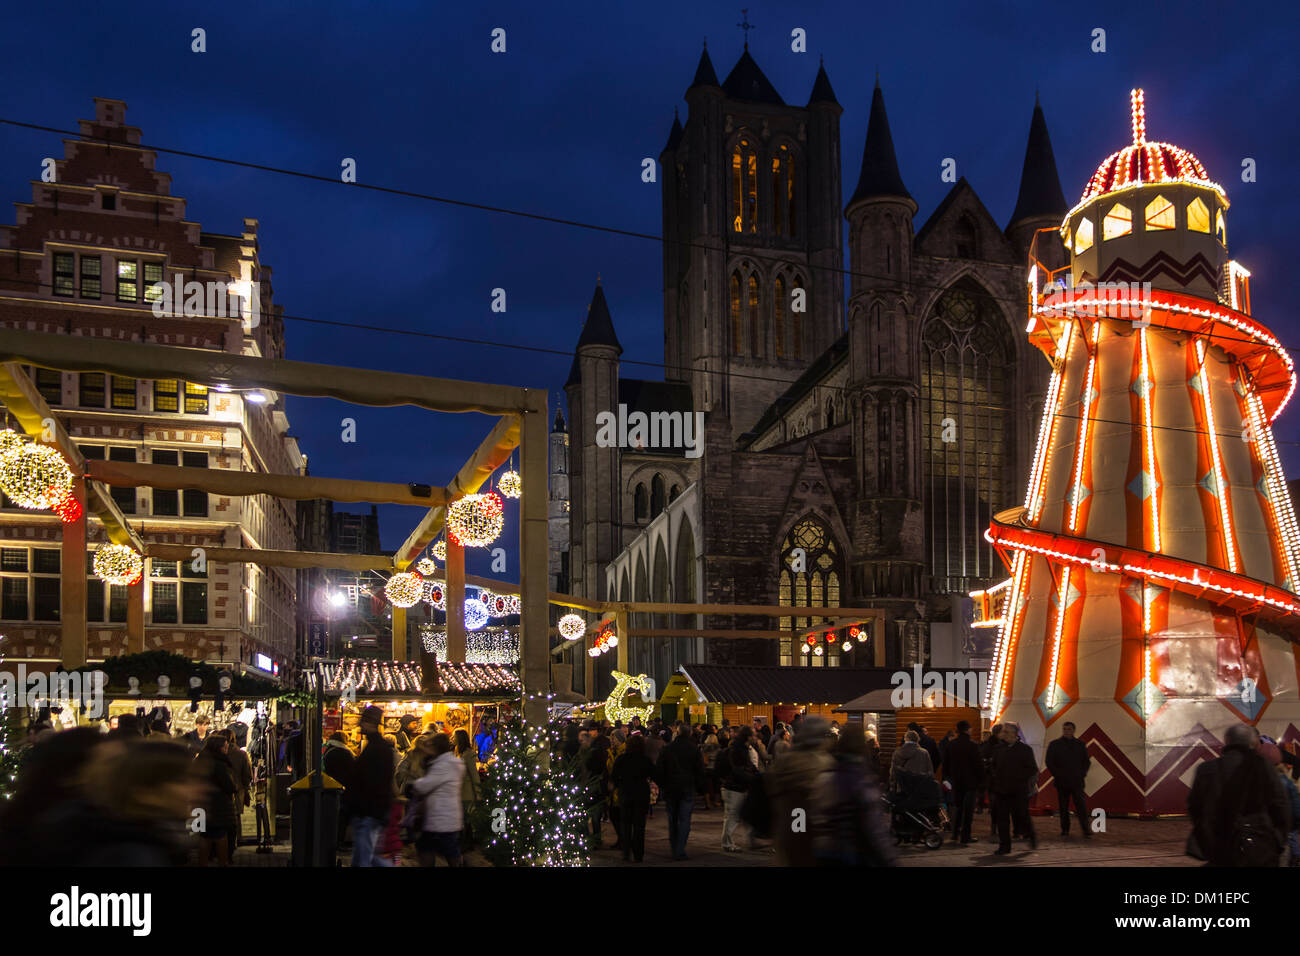 Illuminated helter skelter and people shopping at evening Christmas market in winter, Korenmarkt / Corn Market, Ghent, Belgium Stock Photo